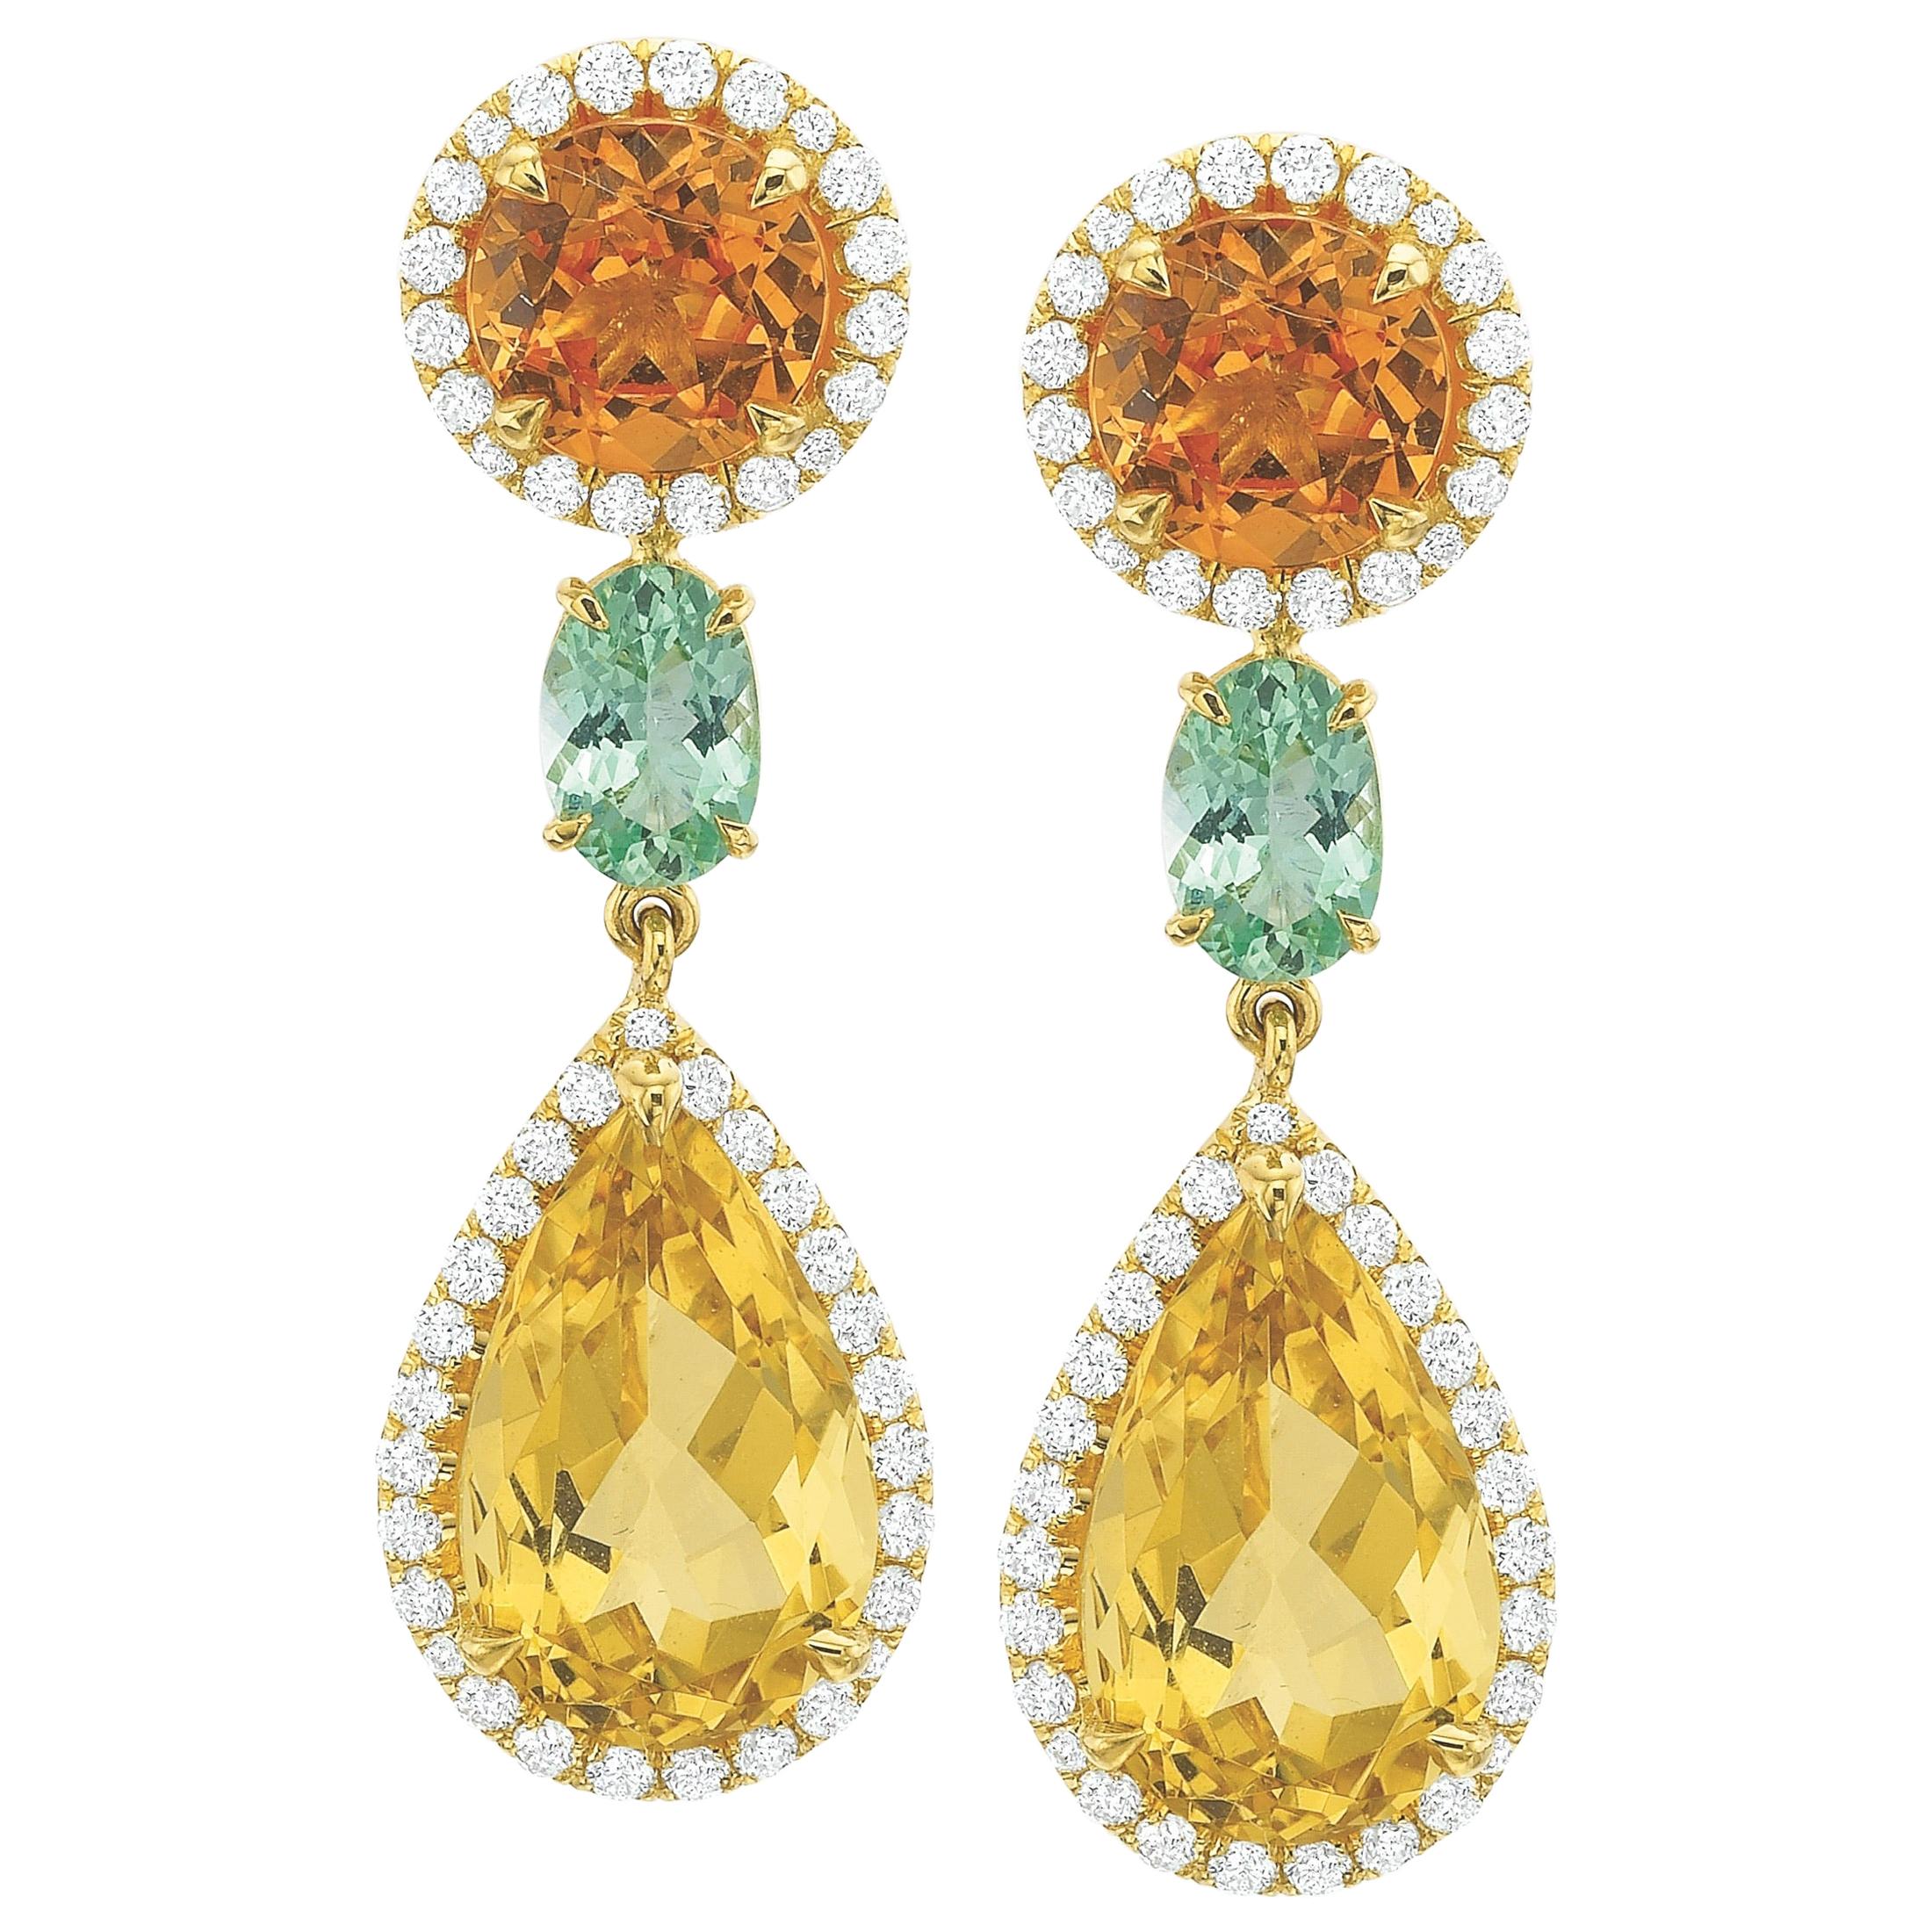 Diamond, Mandarin Garnet and Yellow/Green Beryl Earrings in 18 Karat Yellow Gold